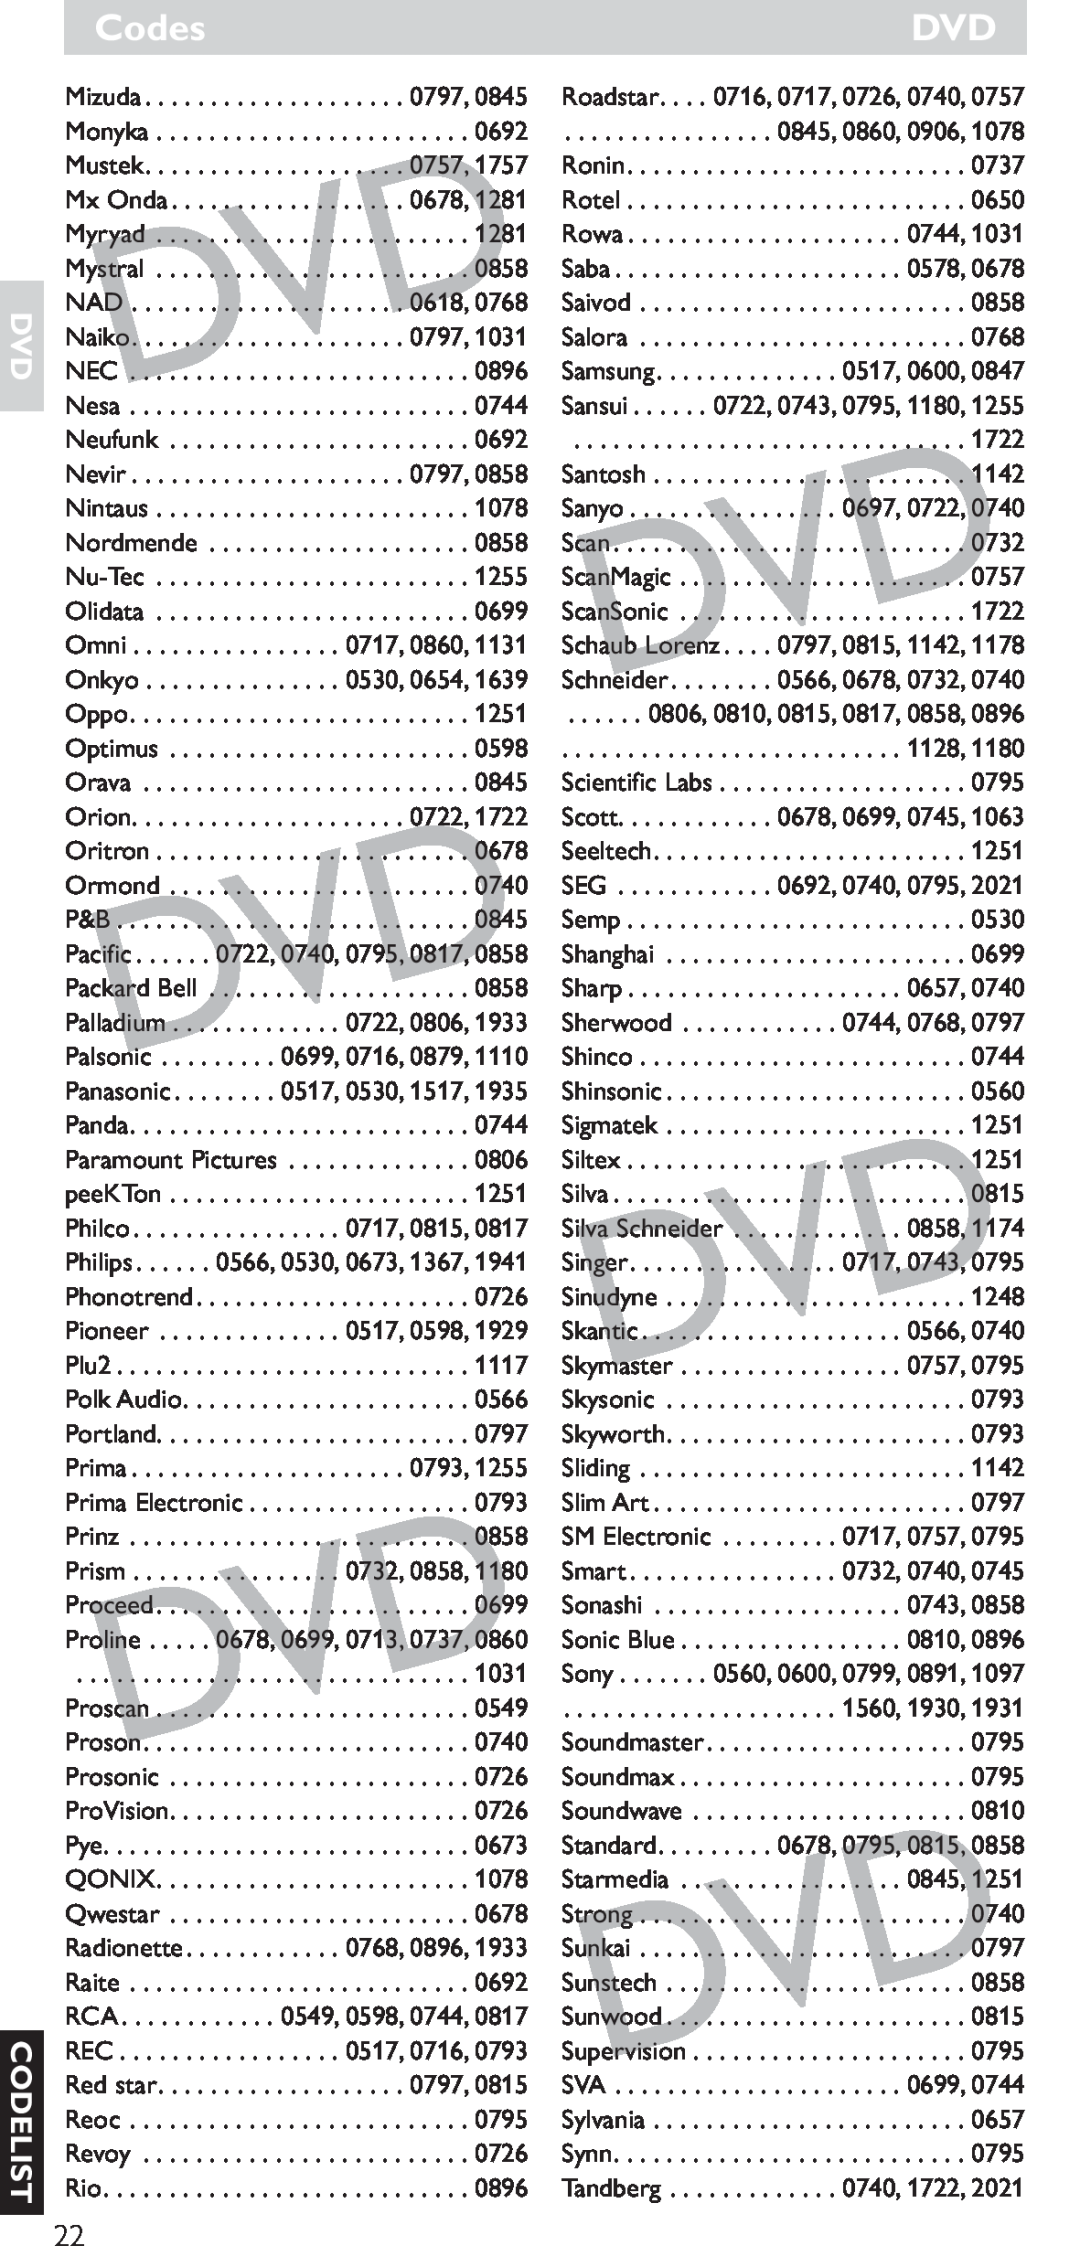 Hitachi SRU 5040/05 manual Codes, Dvd Codelist 